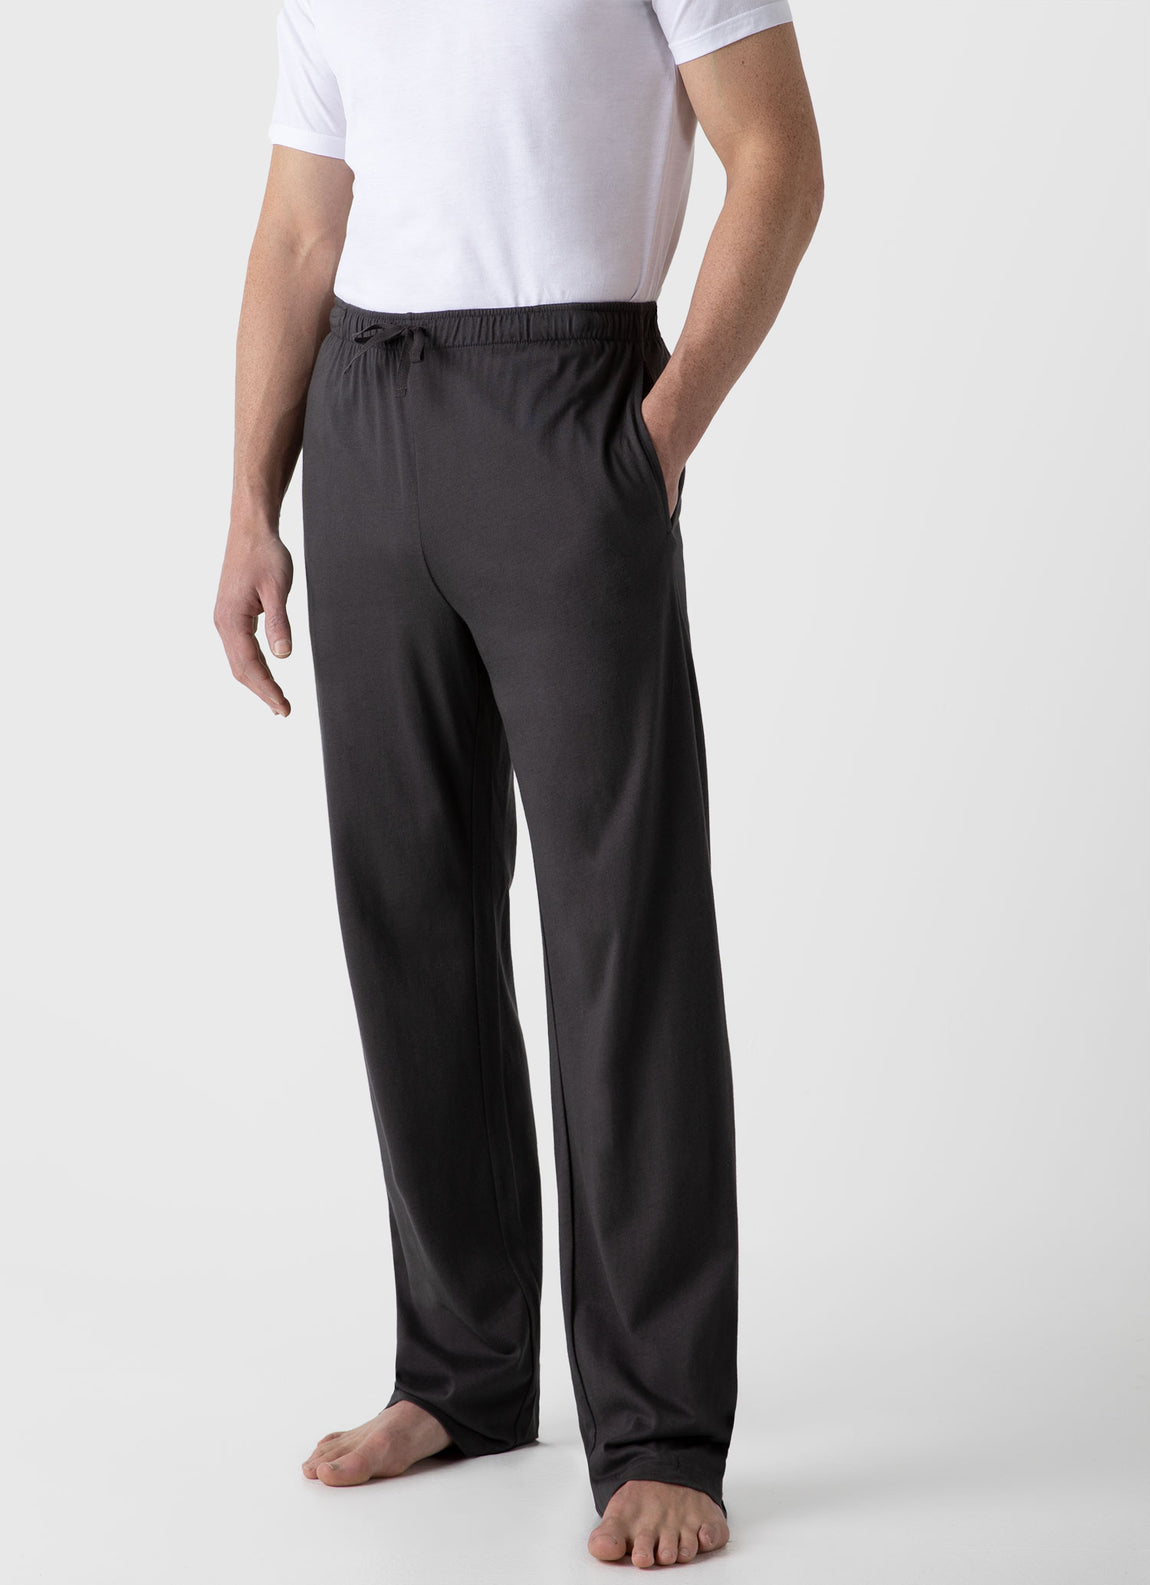 Men's Cotton Modal Lounge Pant in Charcoal | Sunspel